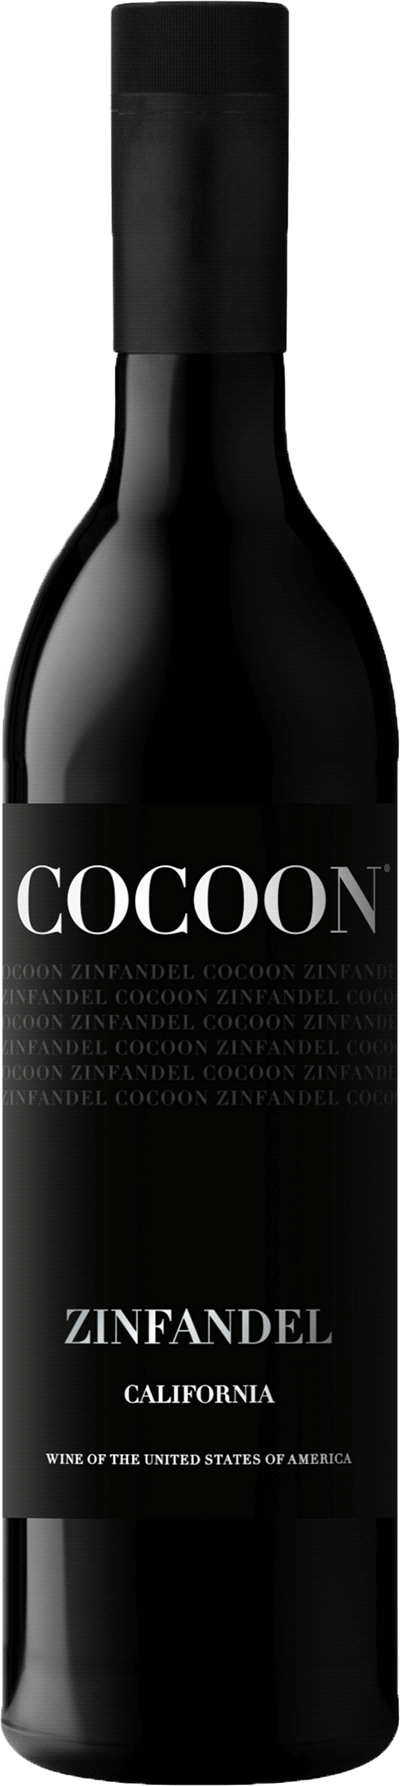 Cocoon Zinfandel